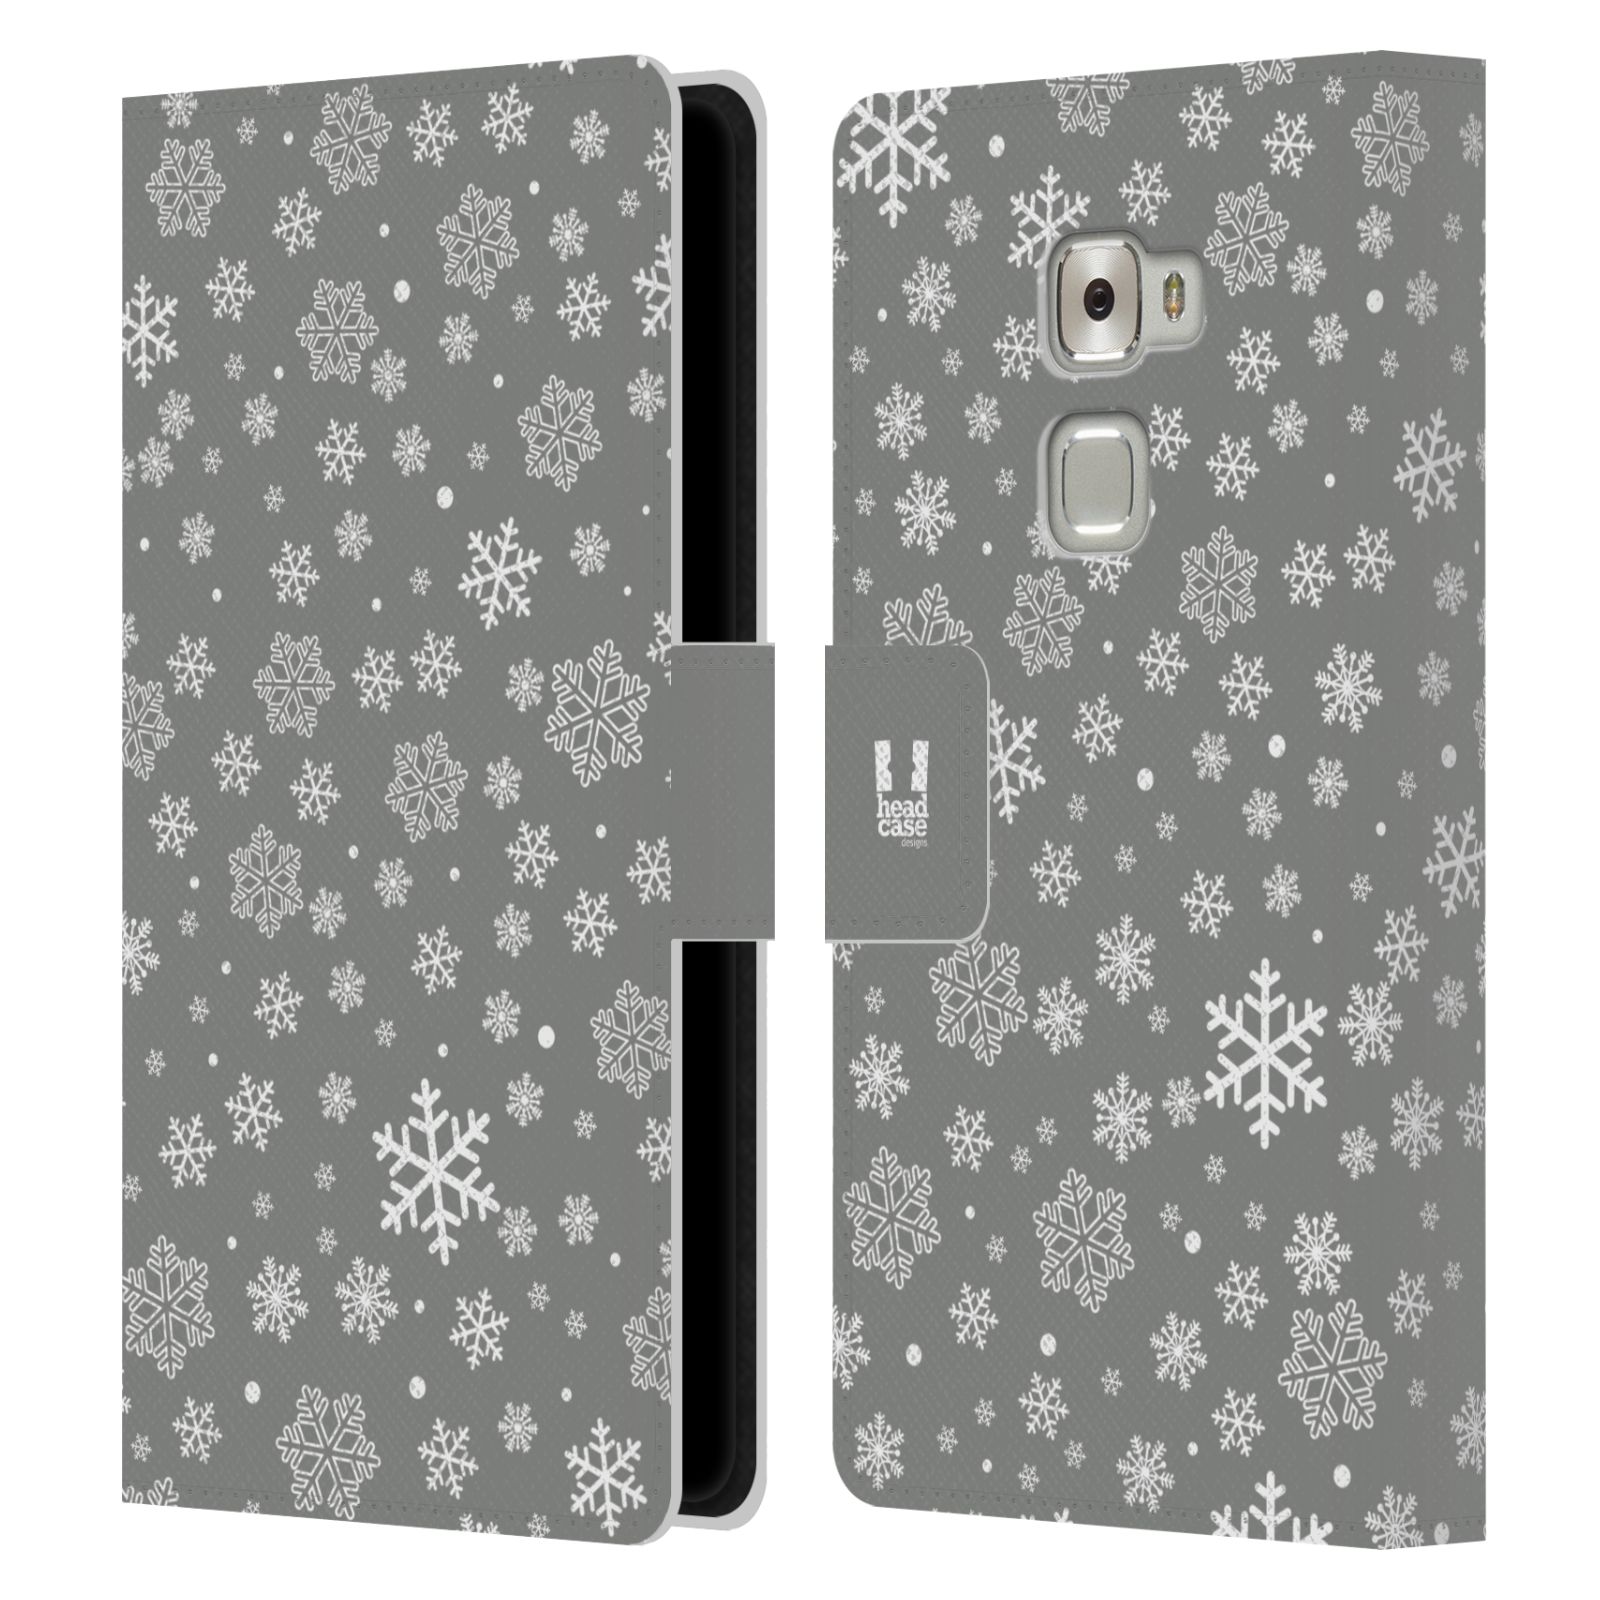 HEAD CASE Flipové pouzdro pro mobil Huawei MATE S stříbrné vzory sněžná vločka